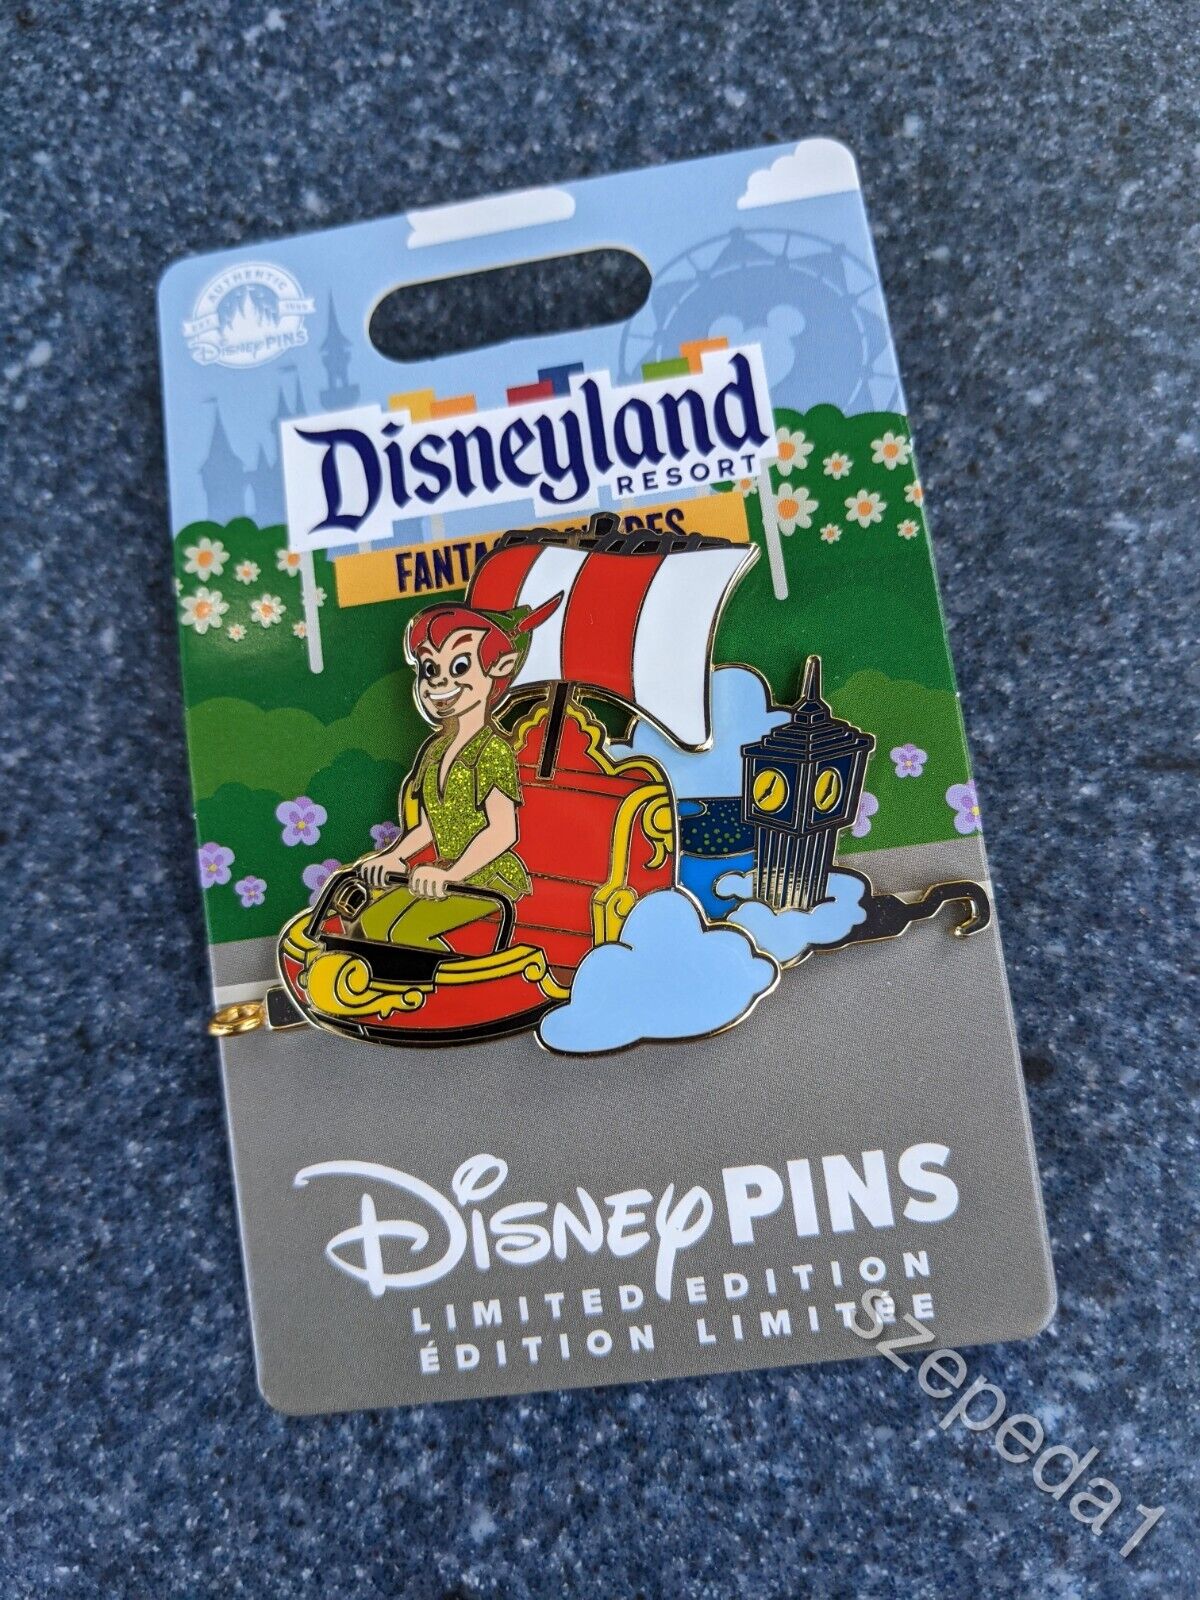 Disneyland exclusive Fantasy Parade Peter Pan\'s Flight LE Pin 